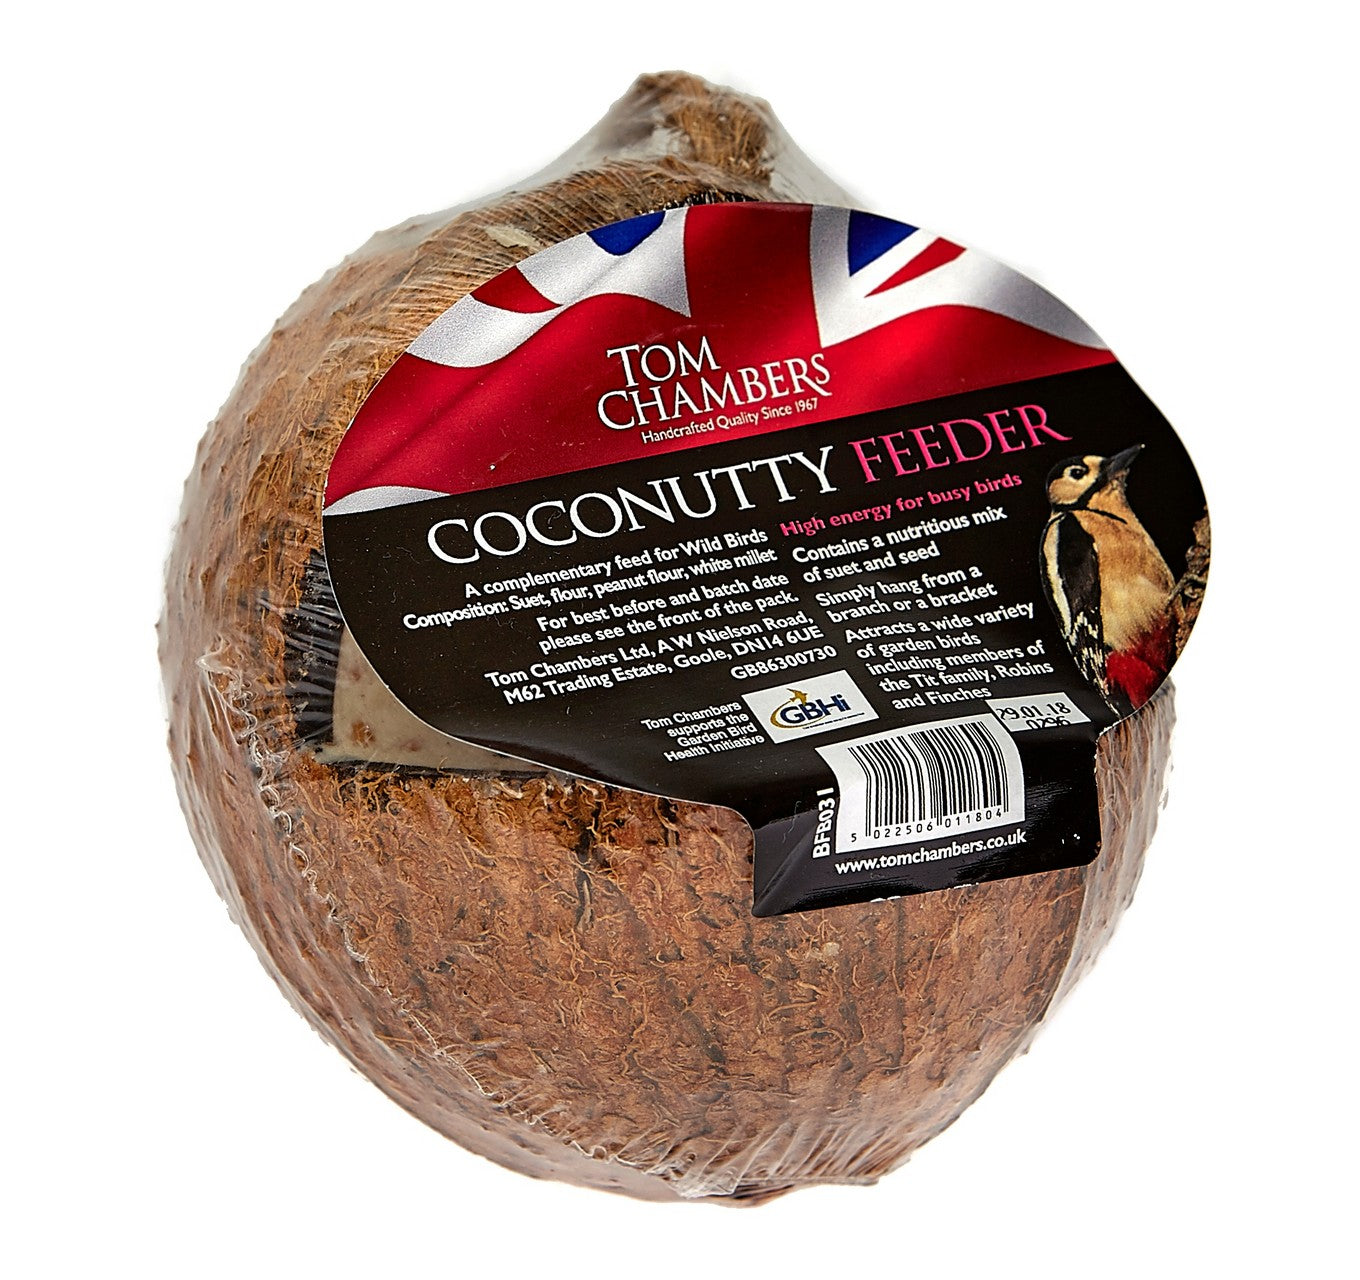 Coconut Whole